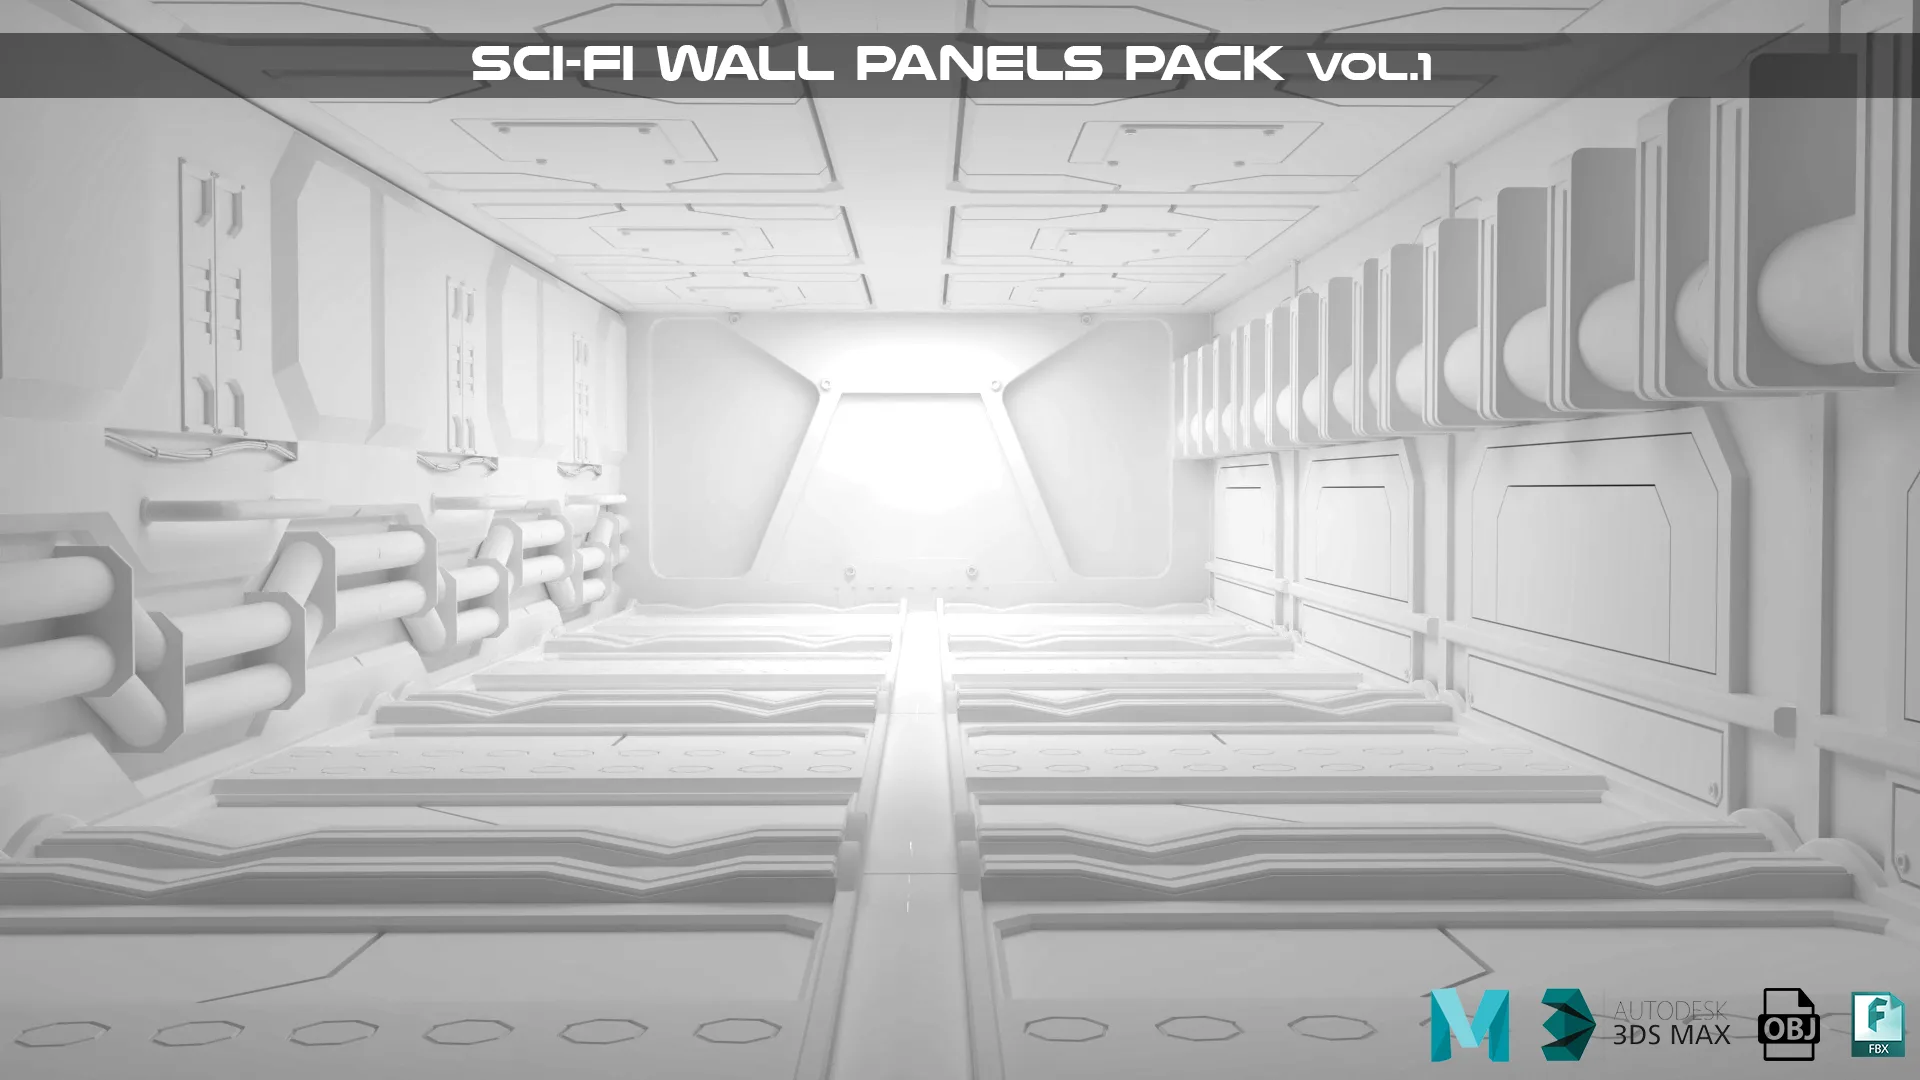 SciFi Wall Panels